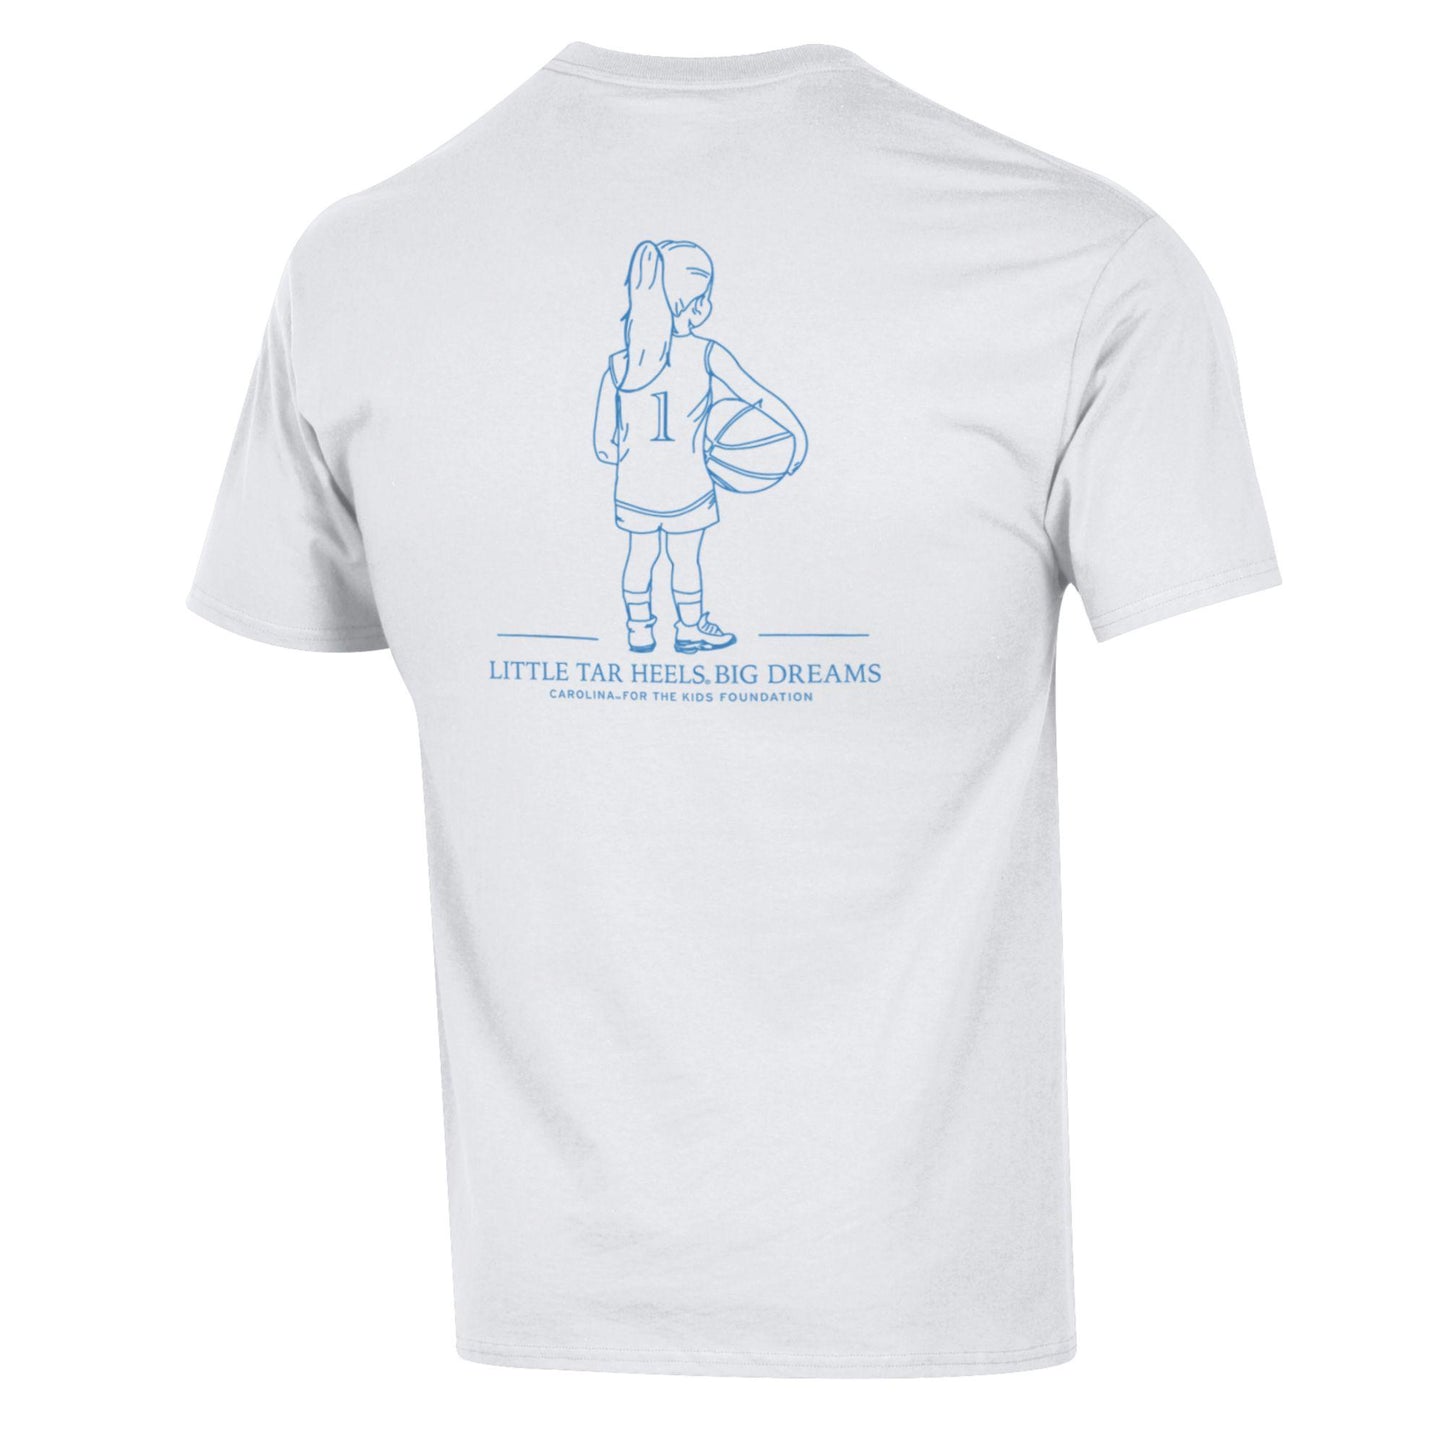 Carolina for the Kids Charitable T-Shirt 100% Profits Donated